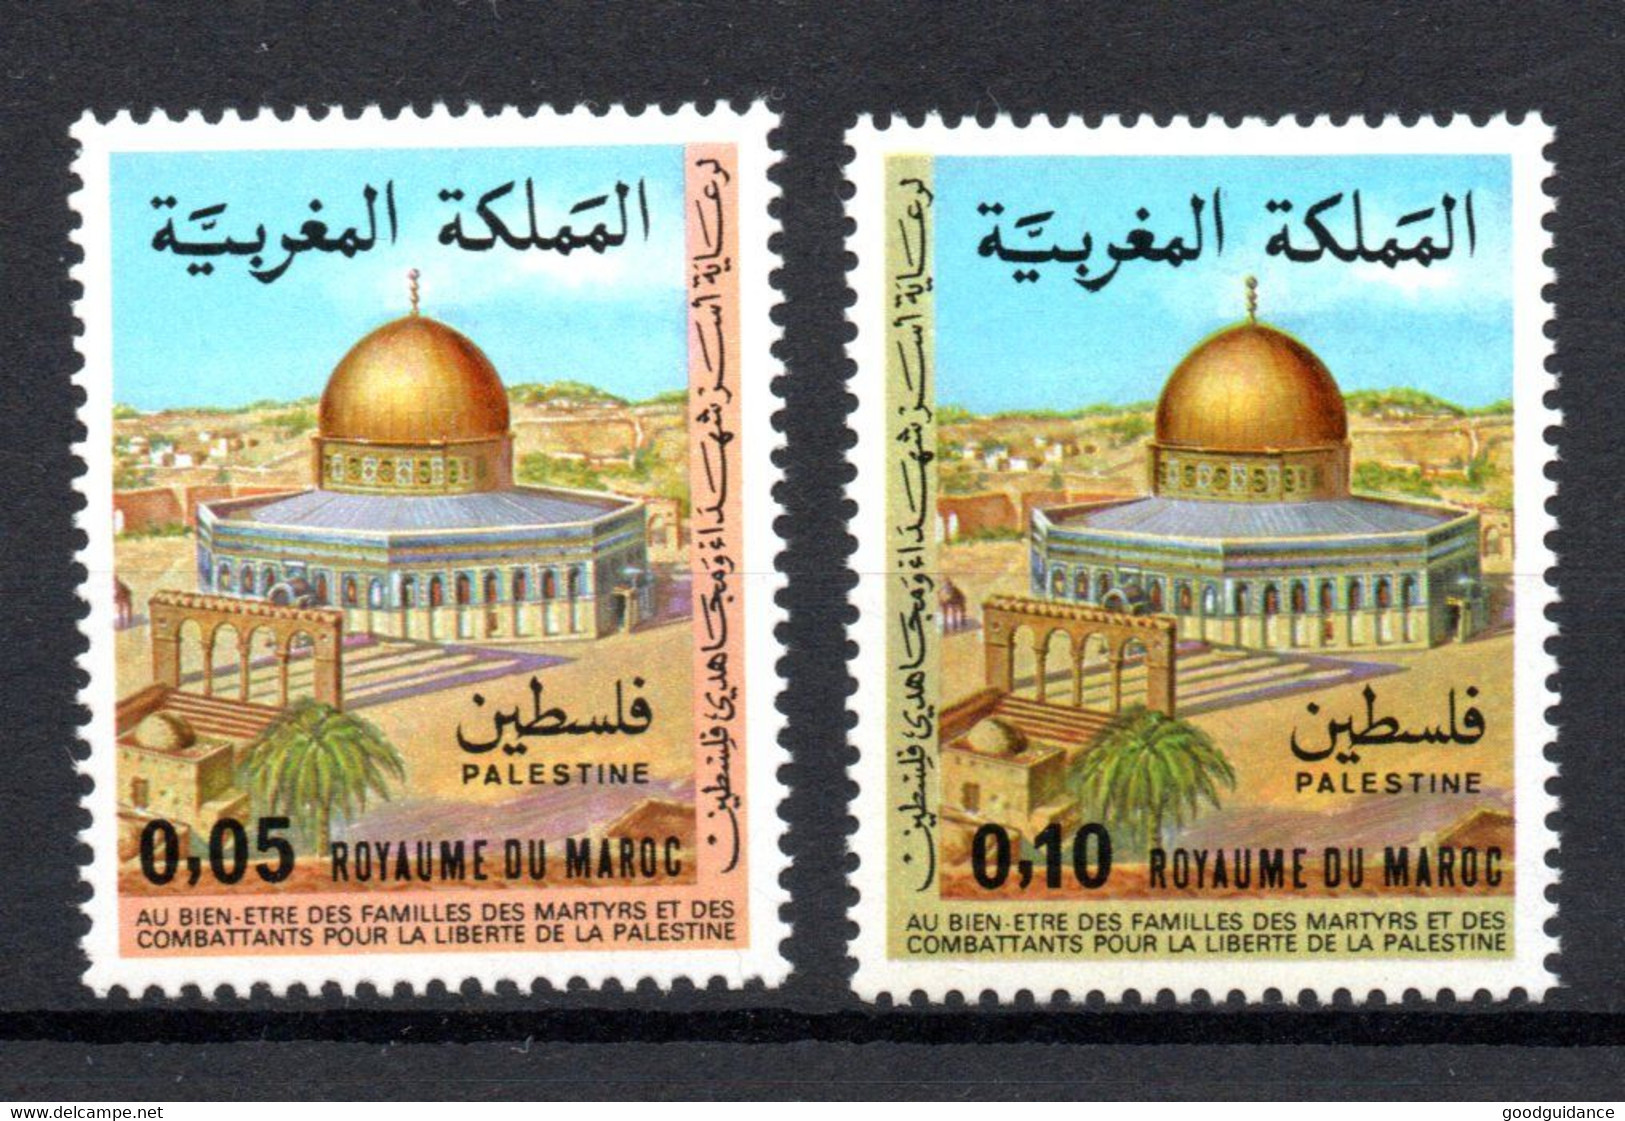 1978 - Morocco- Maroc- Palestinian  Solidarity- Soutien Aux Palestiniens- Dome- Jerusalem- El Quds-  Set 2v.MNH** - Moschee E Sinagoghe